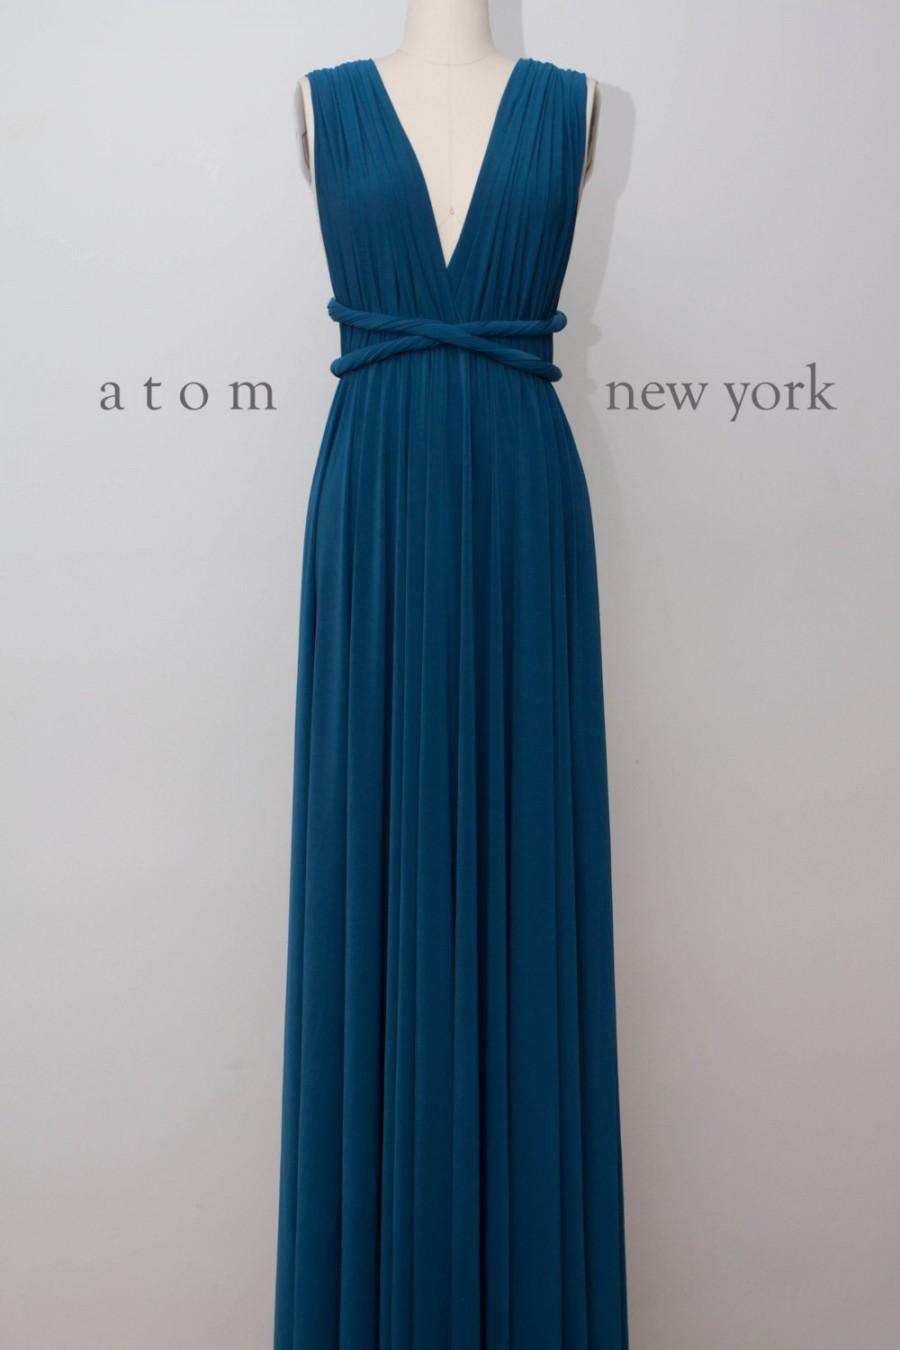 زفاف - Teal LONG Floor Length Ball Gown Infinity Dress Convertible Formal Multiway Wrap Dress Bridesmaid Evening Dress